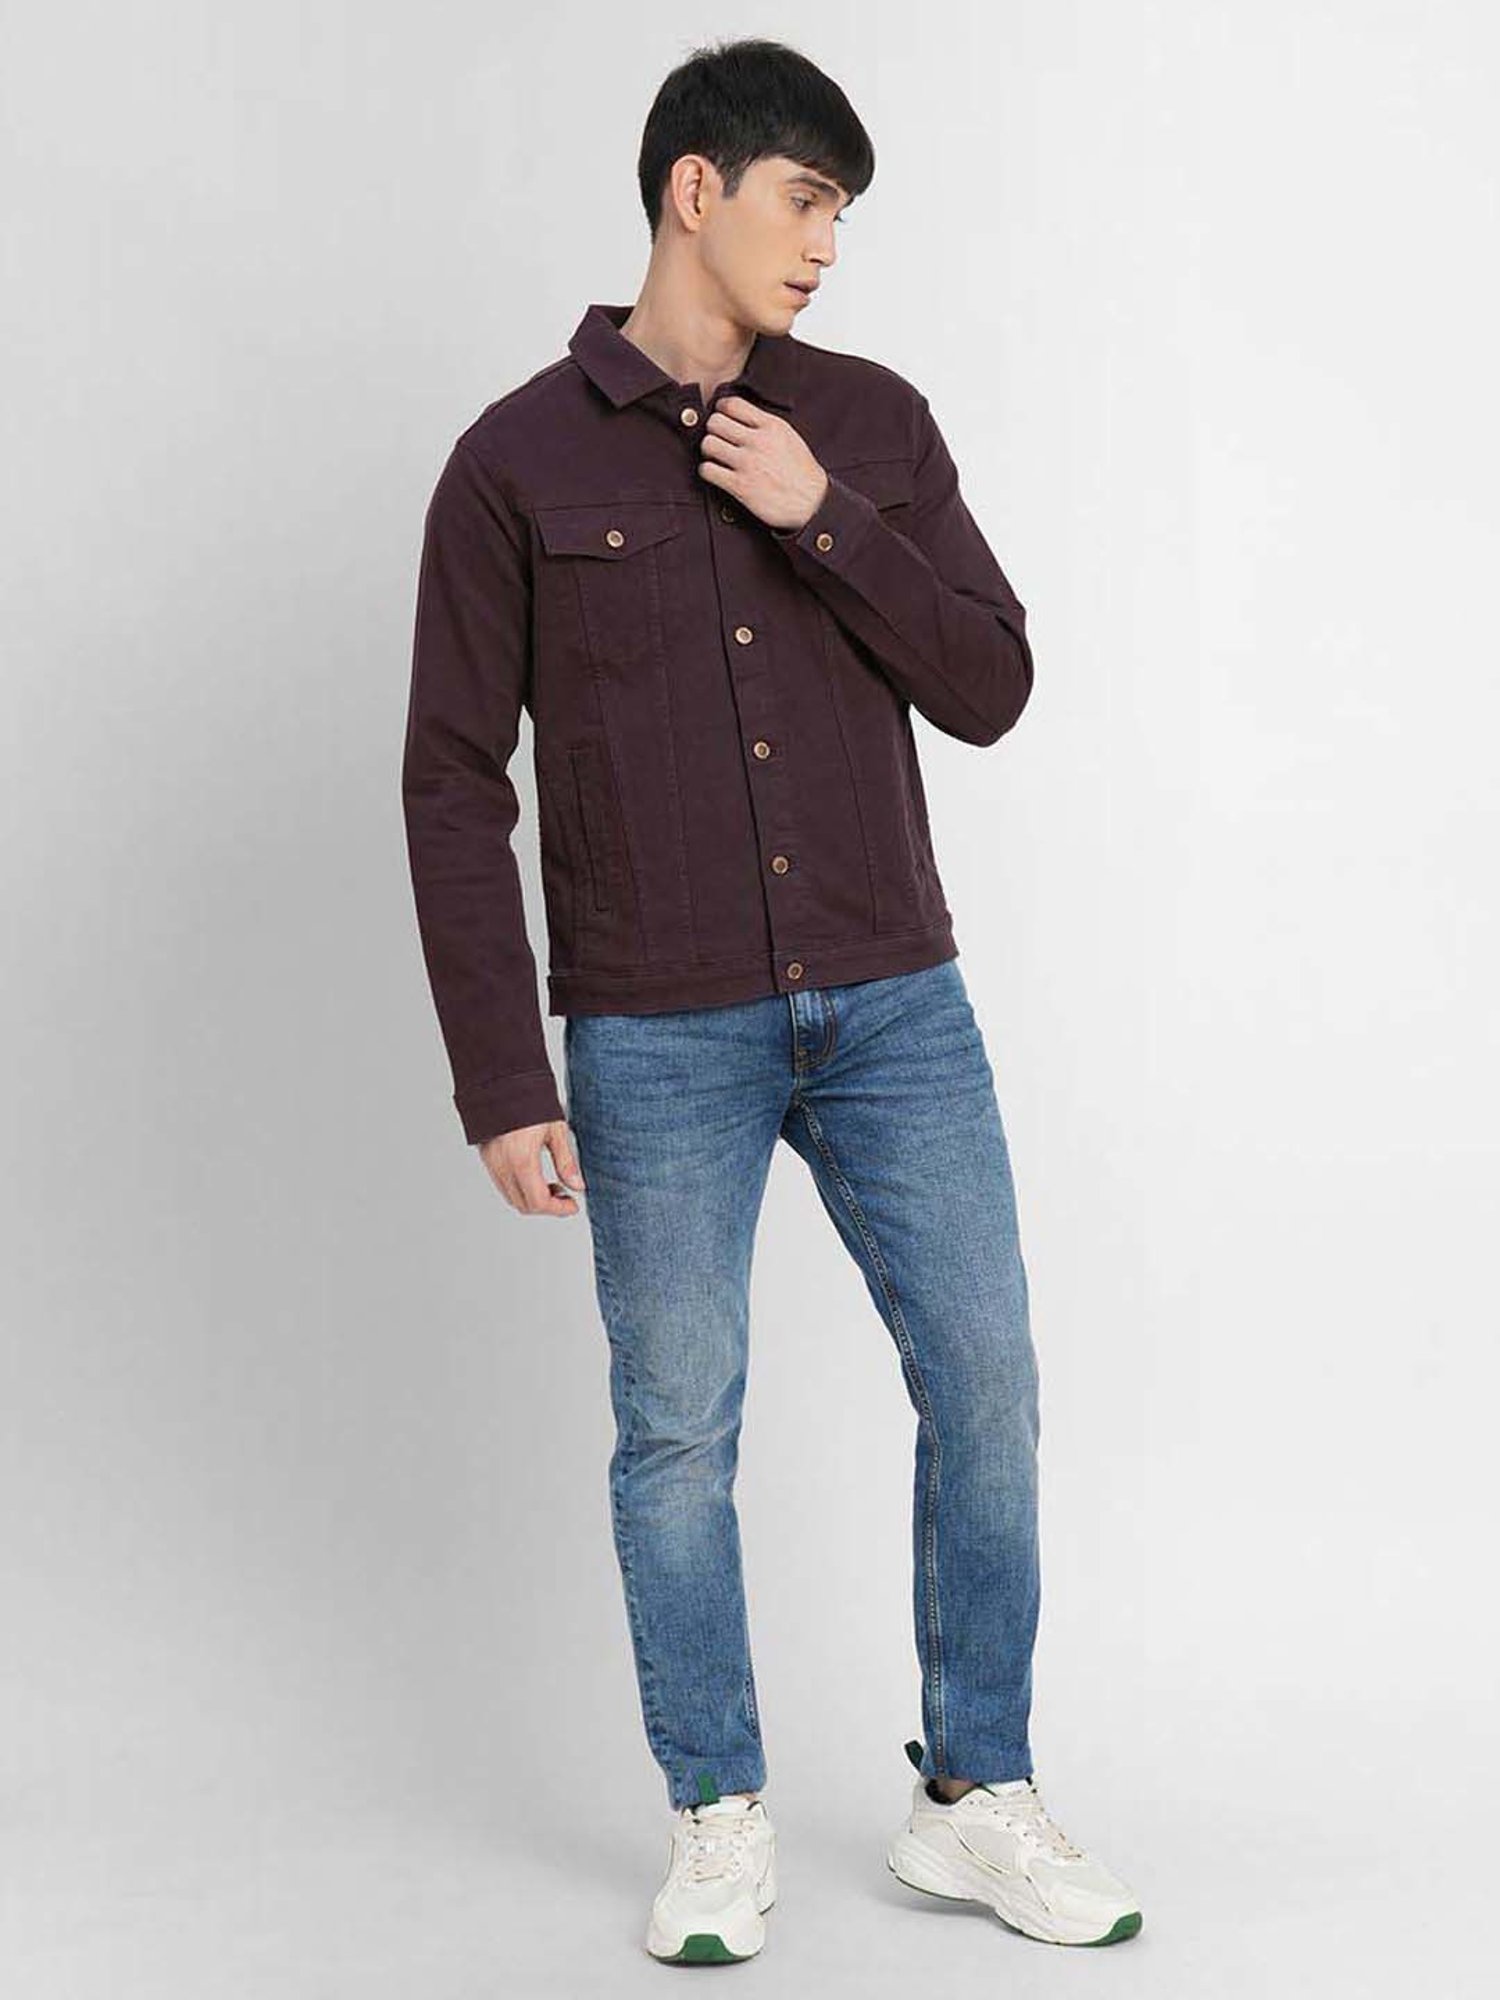 Layer Coat Jacket | Denim jacket men outfit, Denim outfit men, Denim jacket  fashion